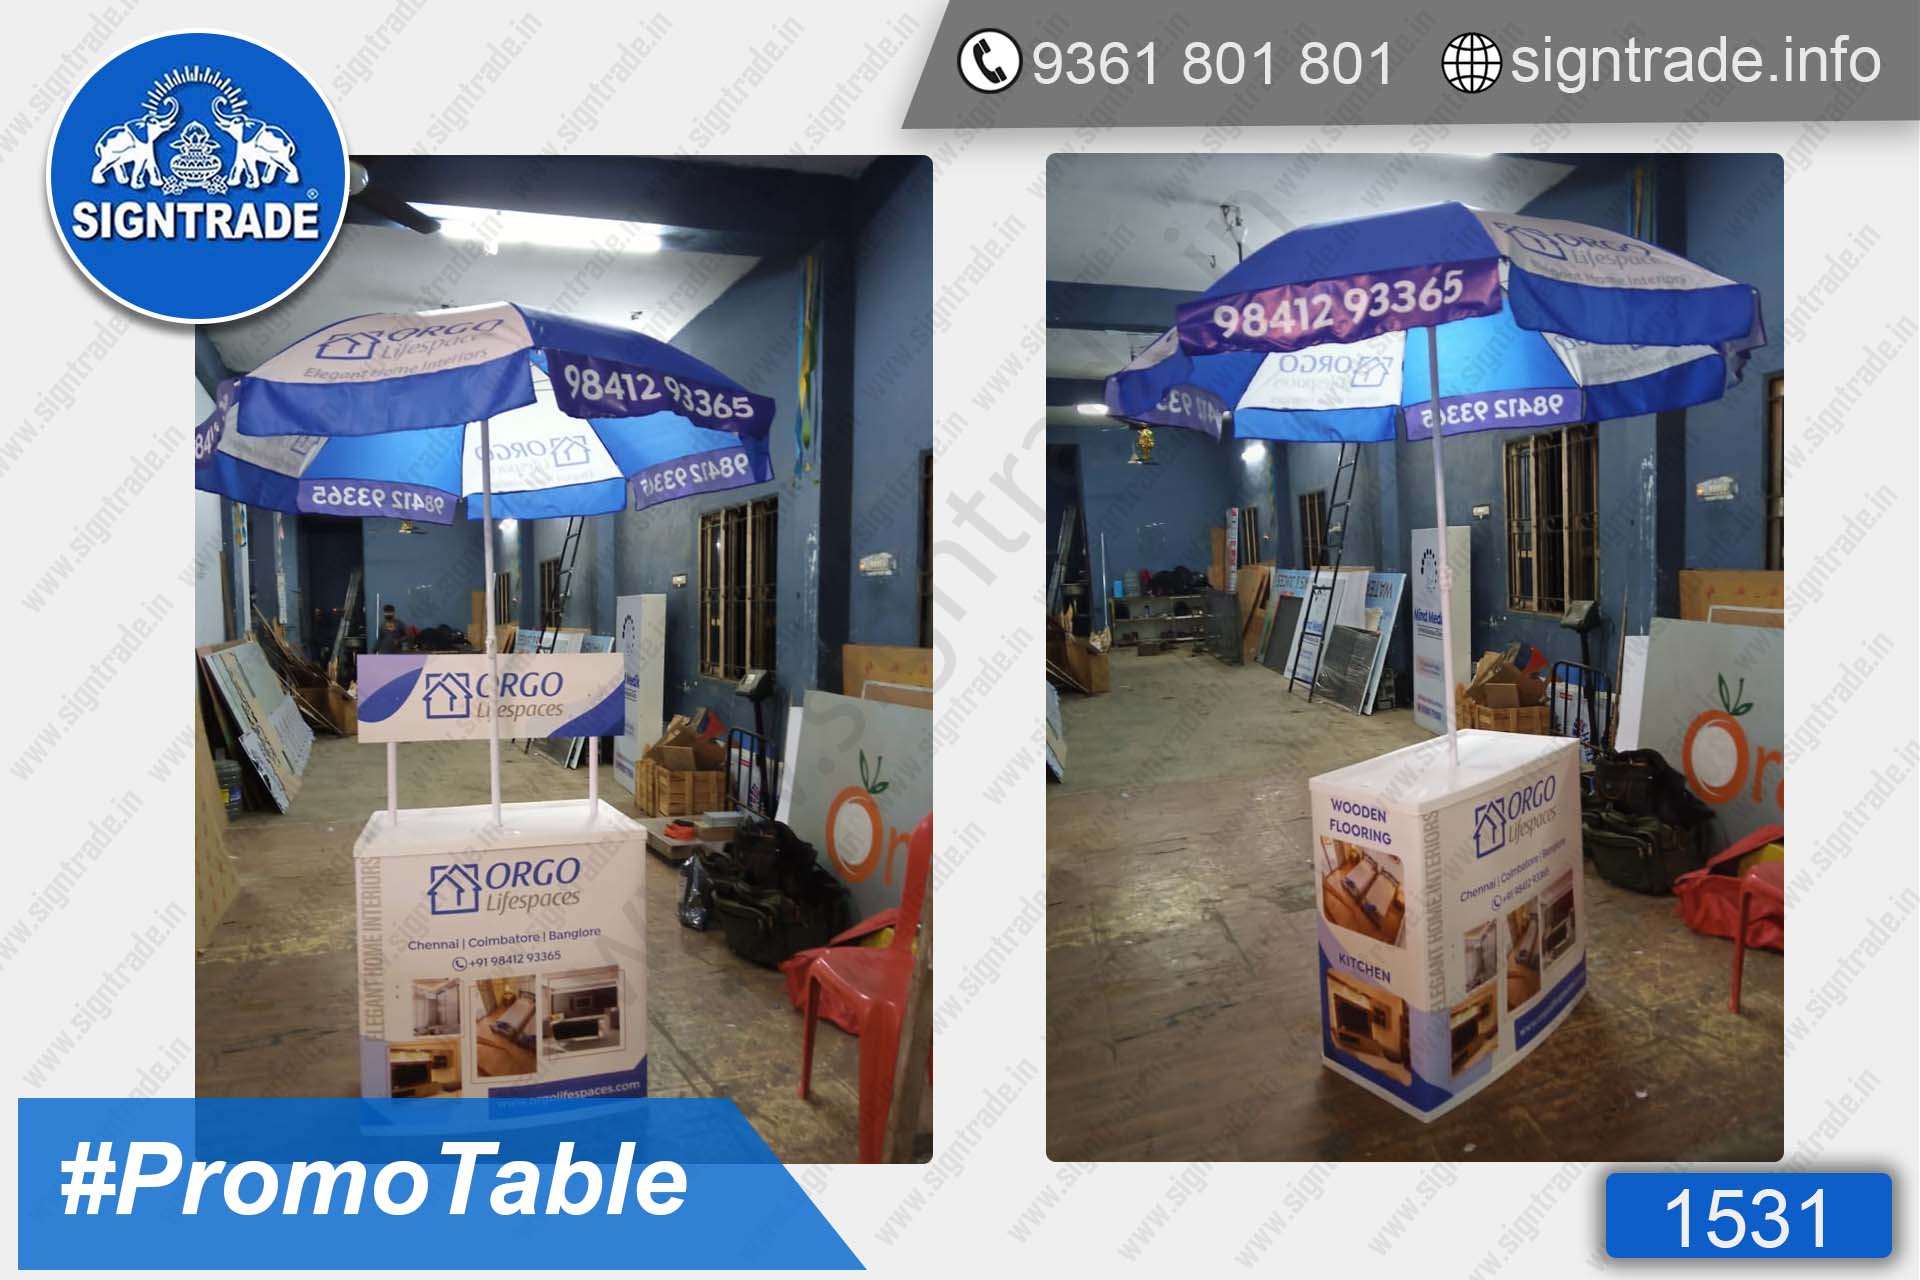 Orgo LifeSpaces, Chennai - SIGNTRADE - Promo Table with Umbrella Manufactures in Chennai